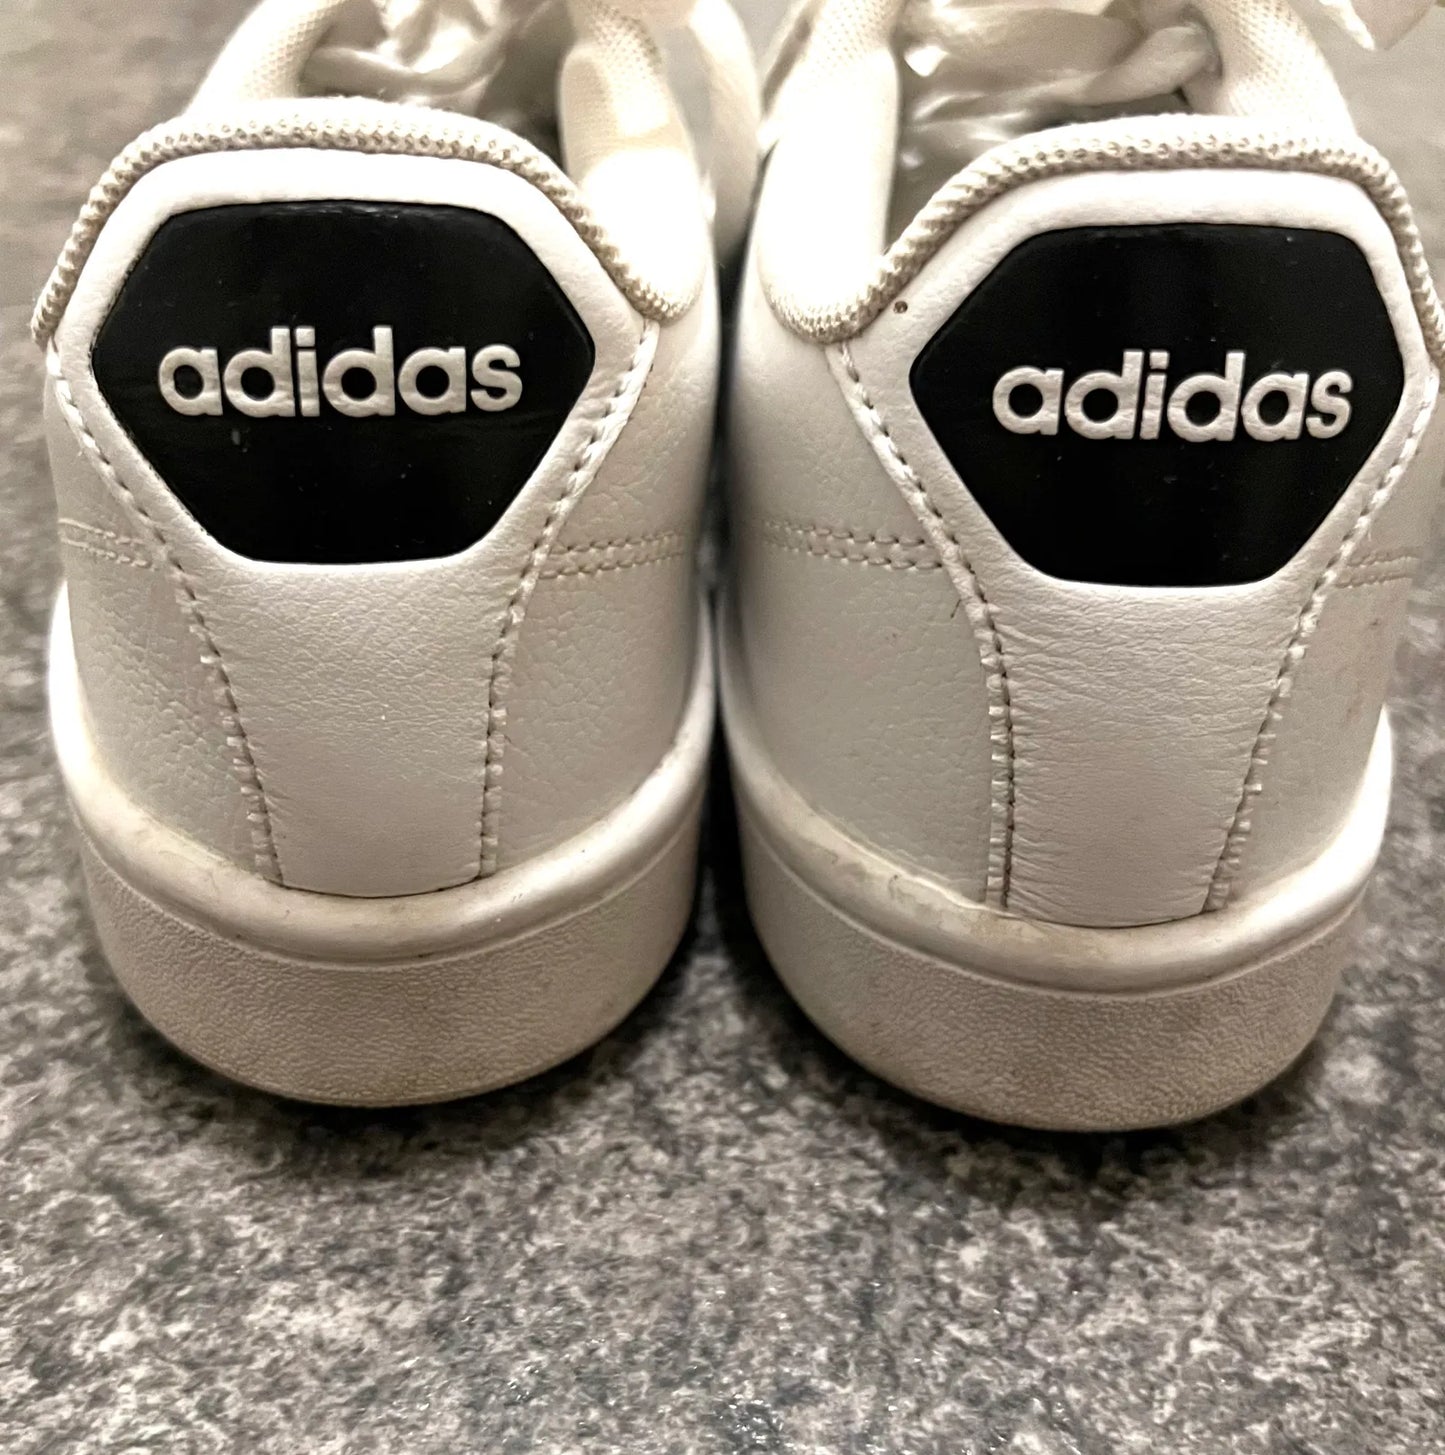 Adidas-sneakers